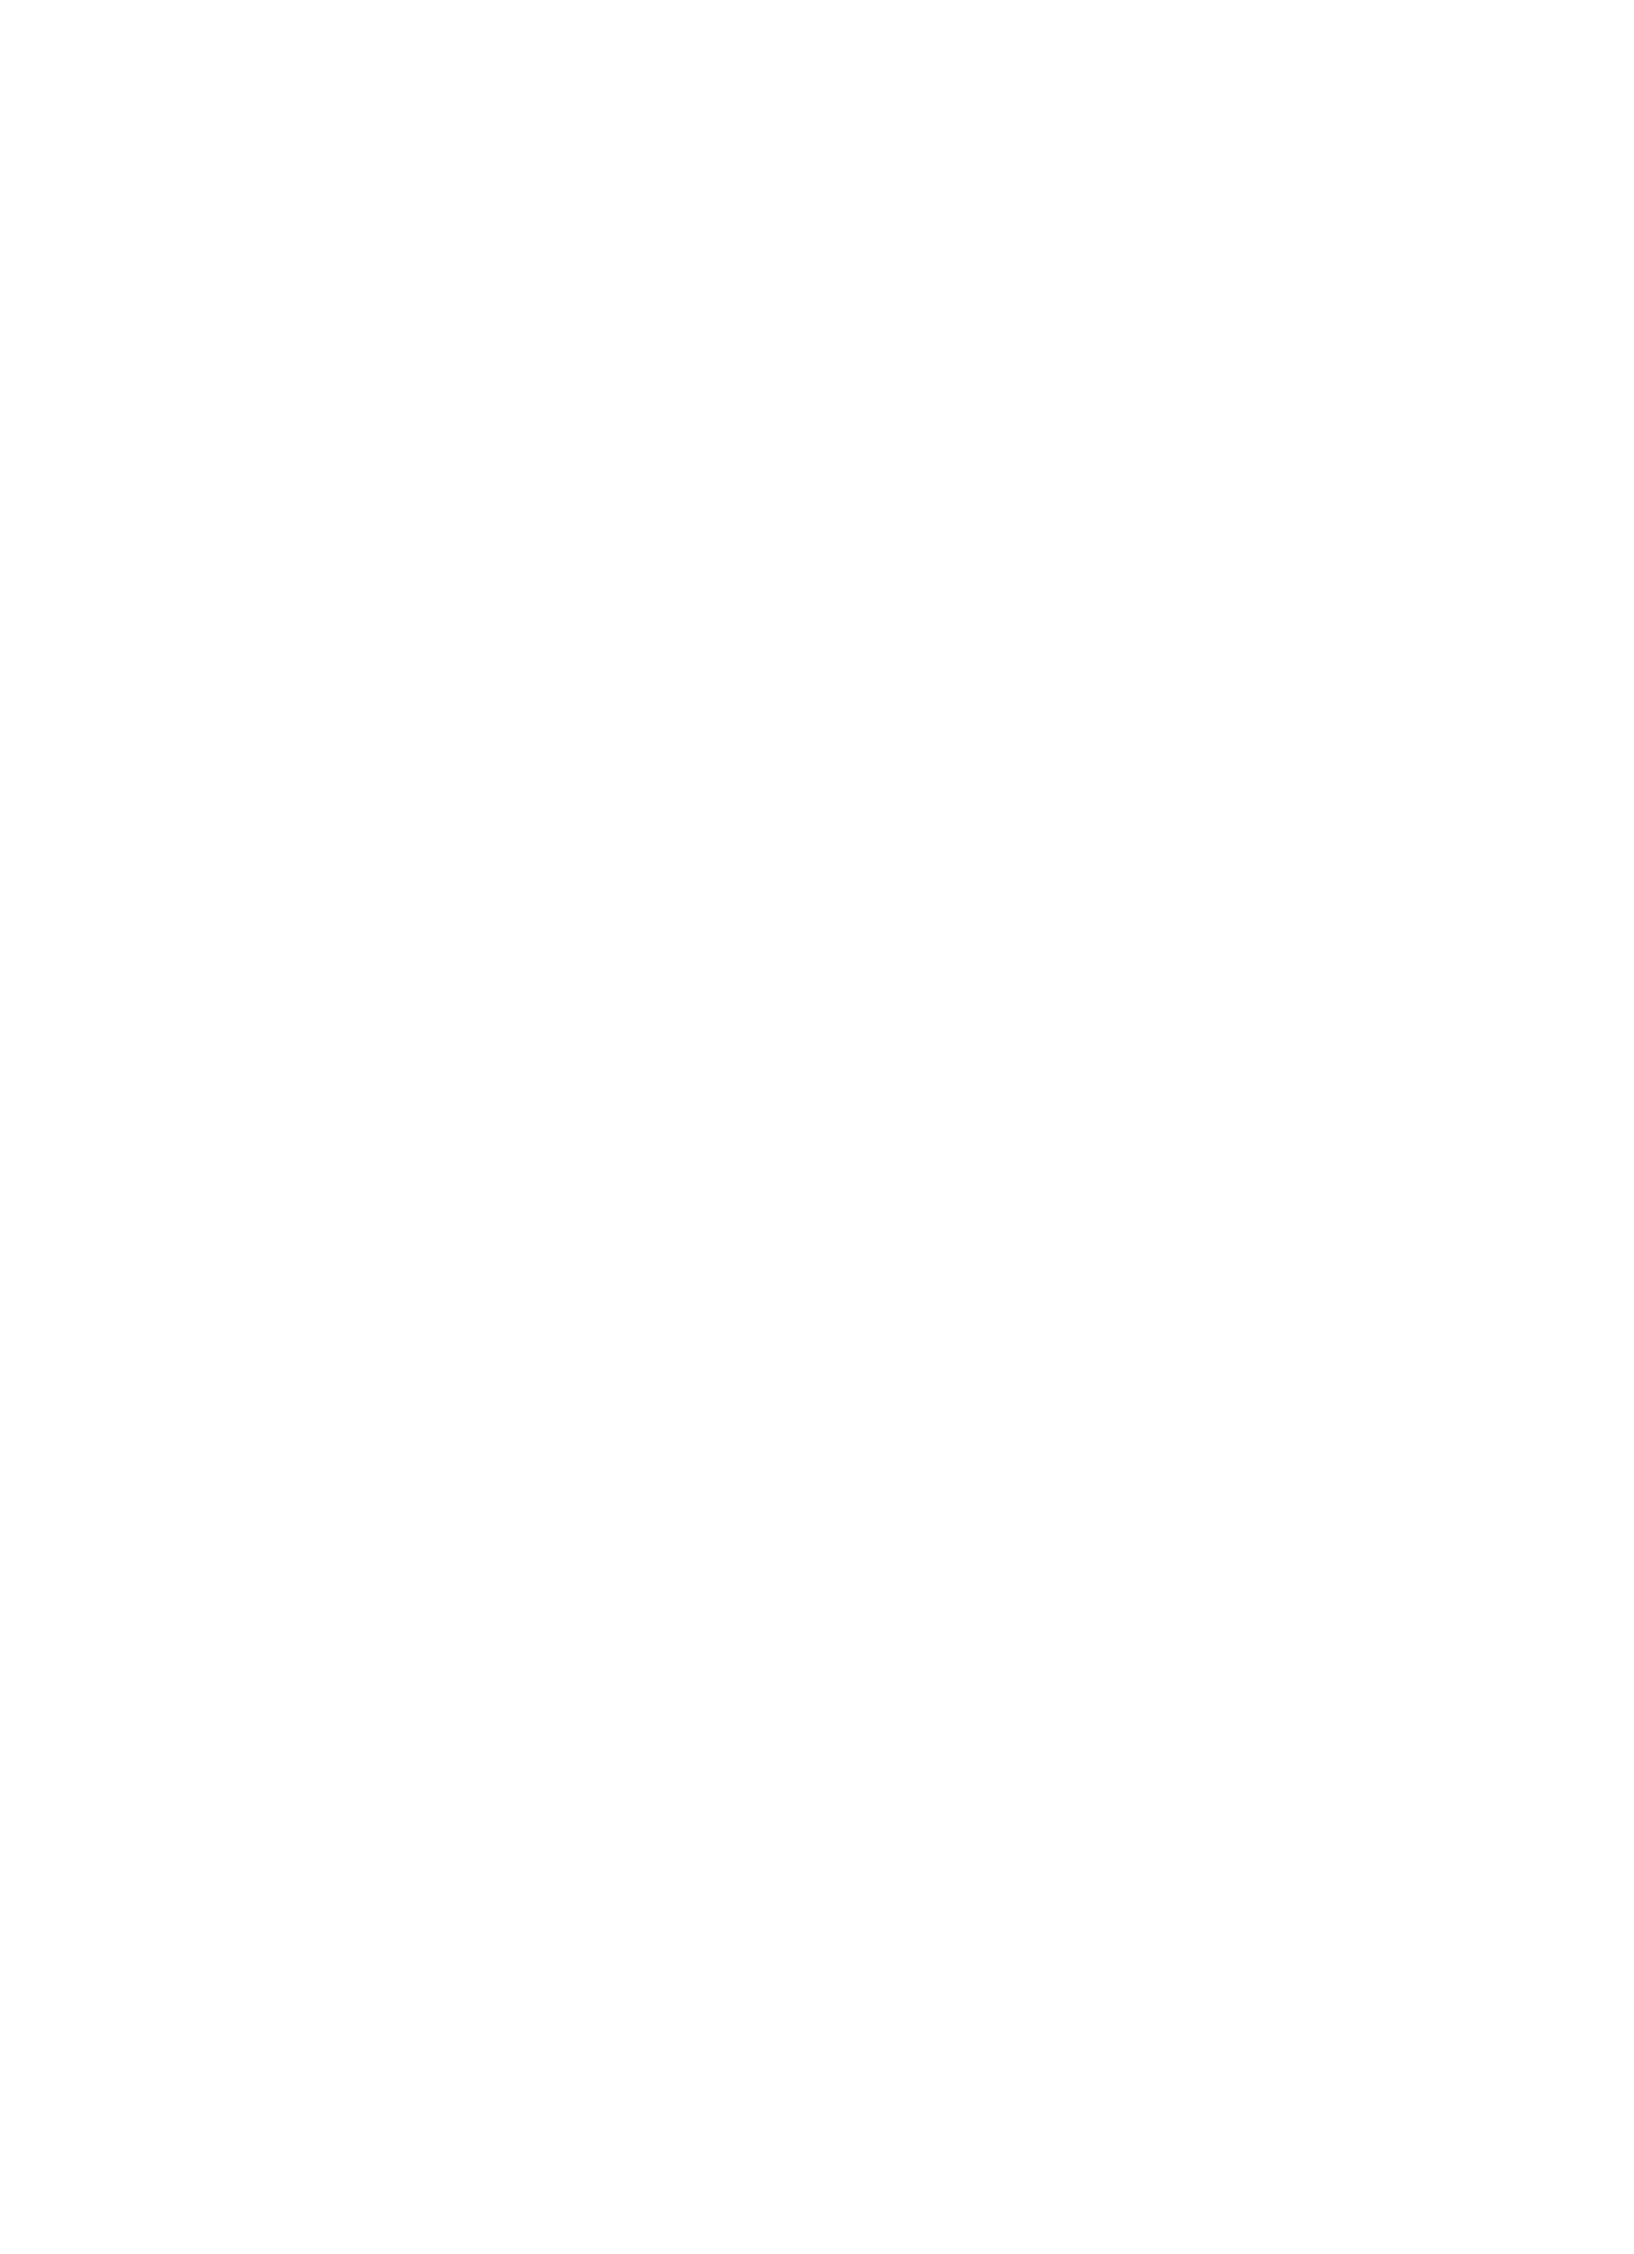 Body and Spirit